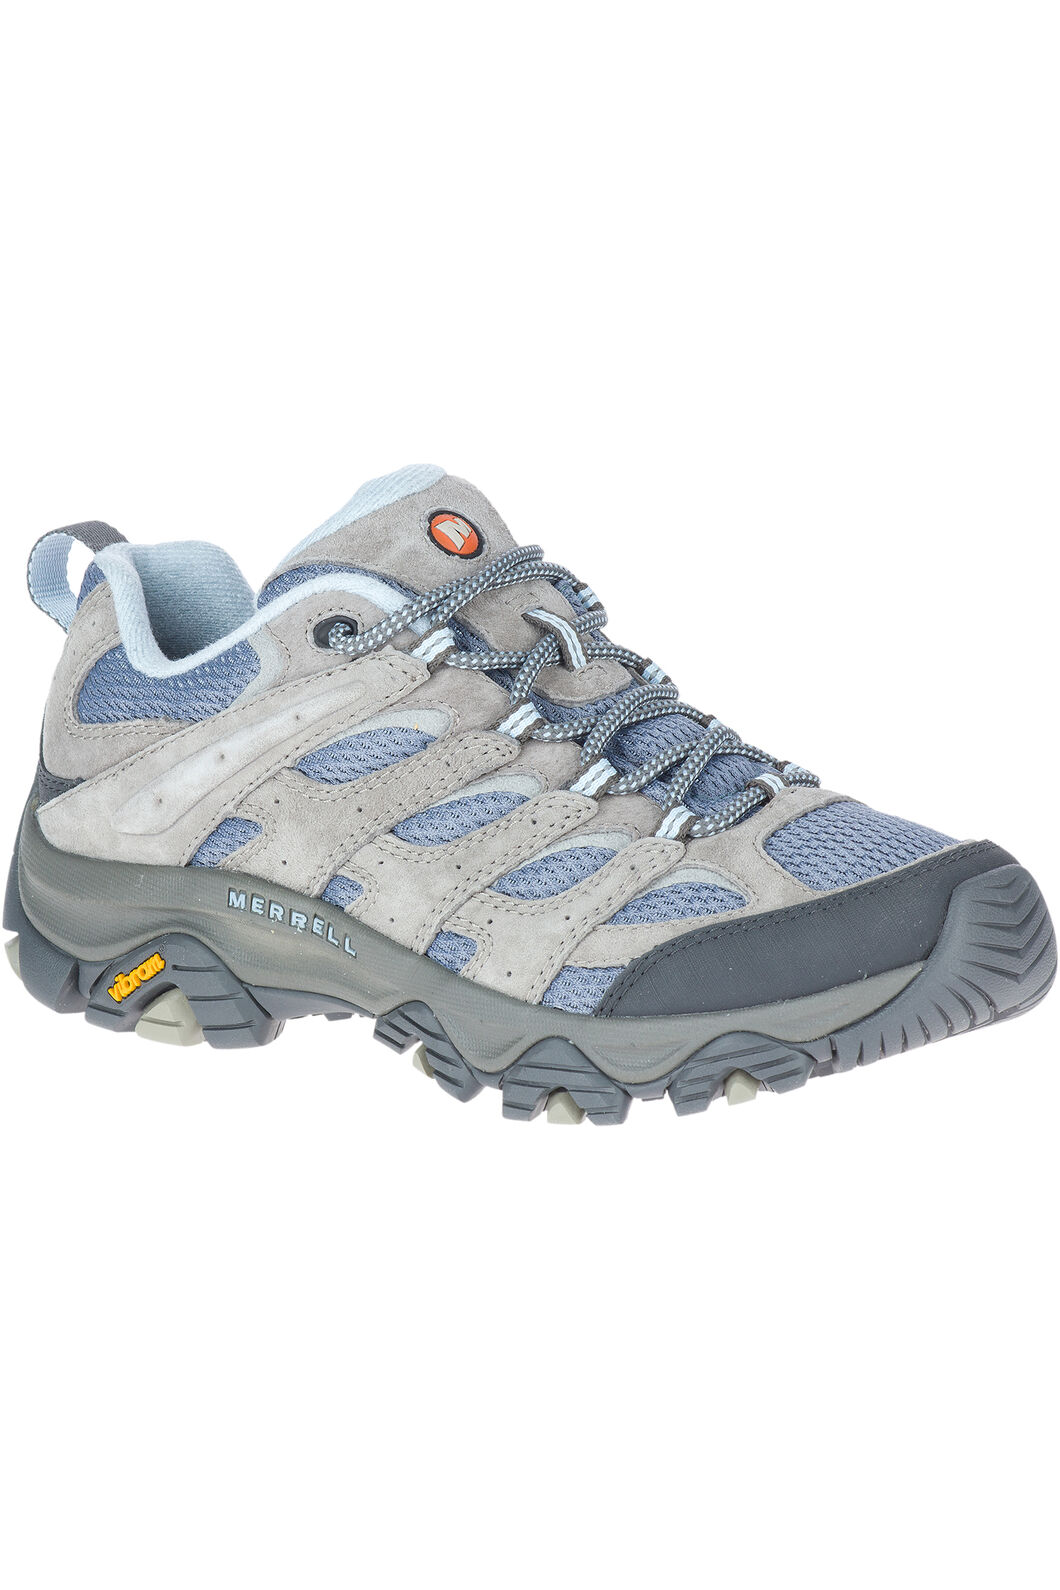 Merrell Women's Moab 3 Ventilator Hiking Shoes | Macpac